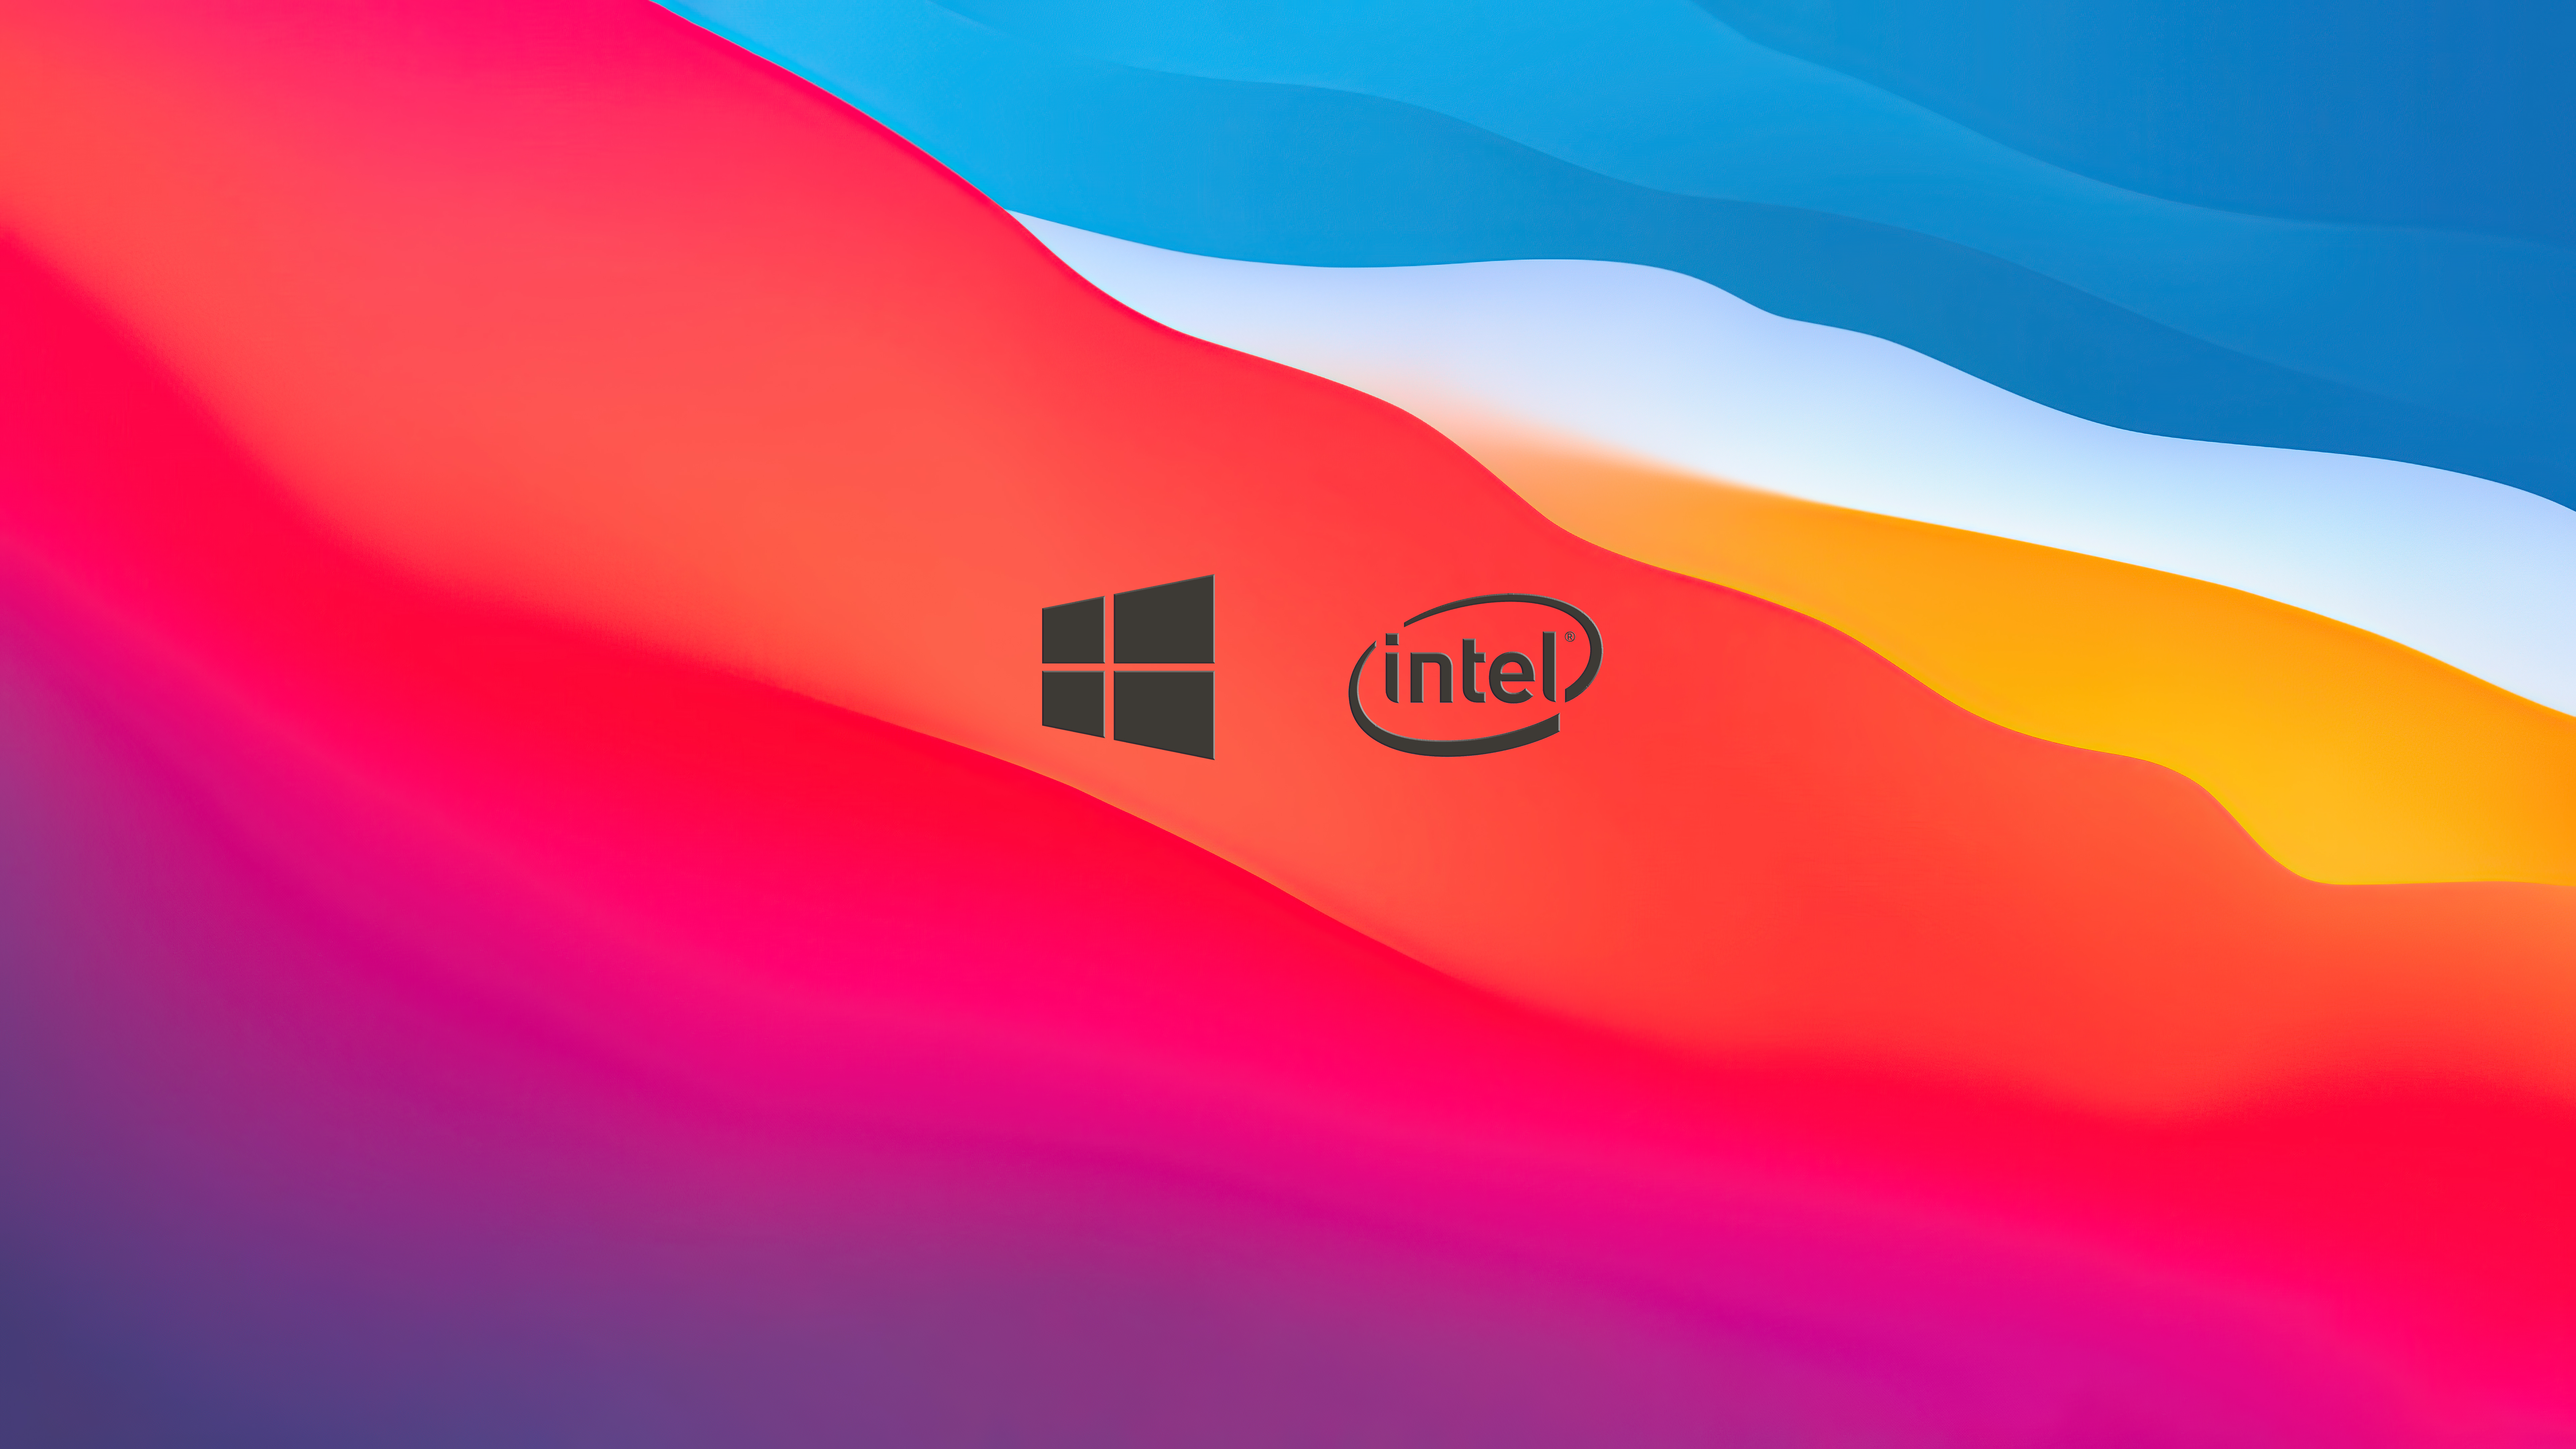 Intel Windows Logo 7680x4320